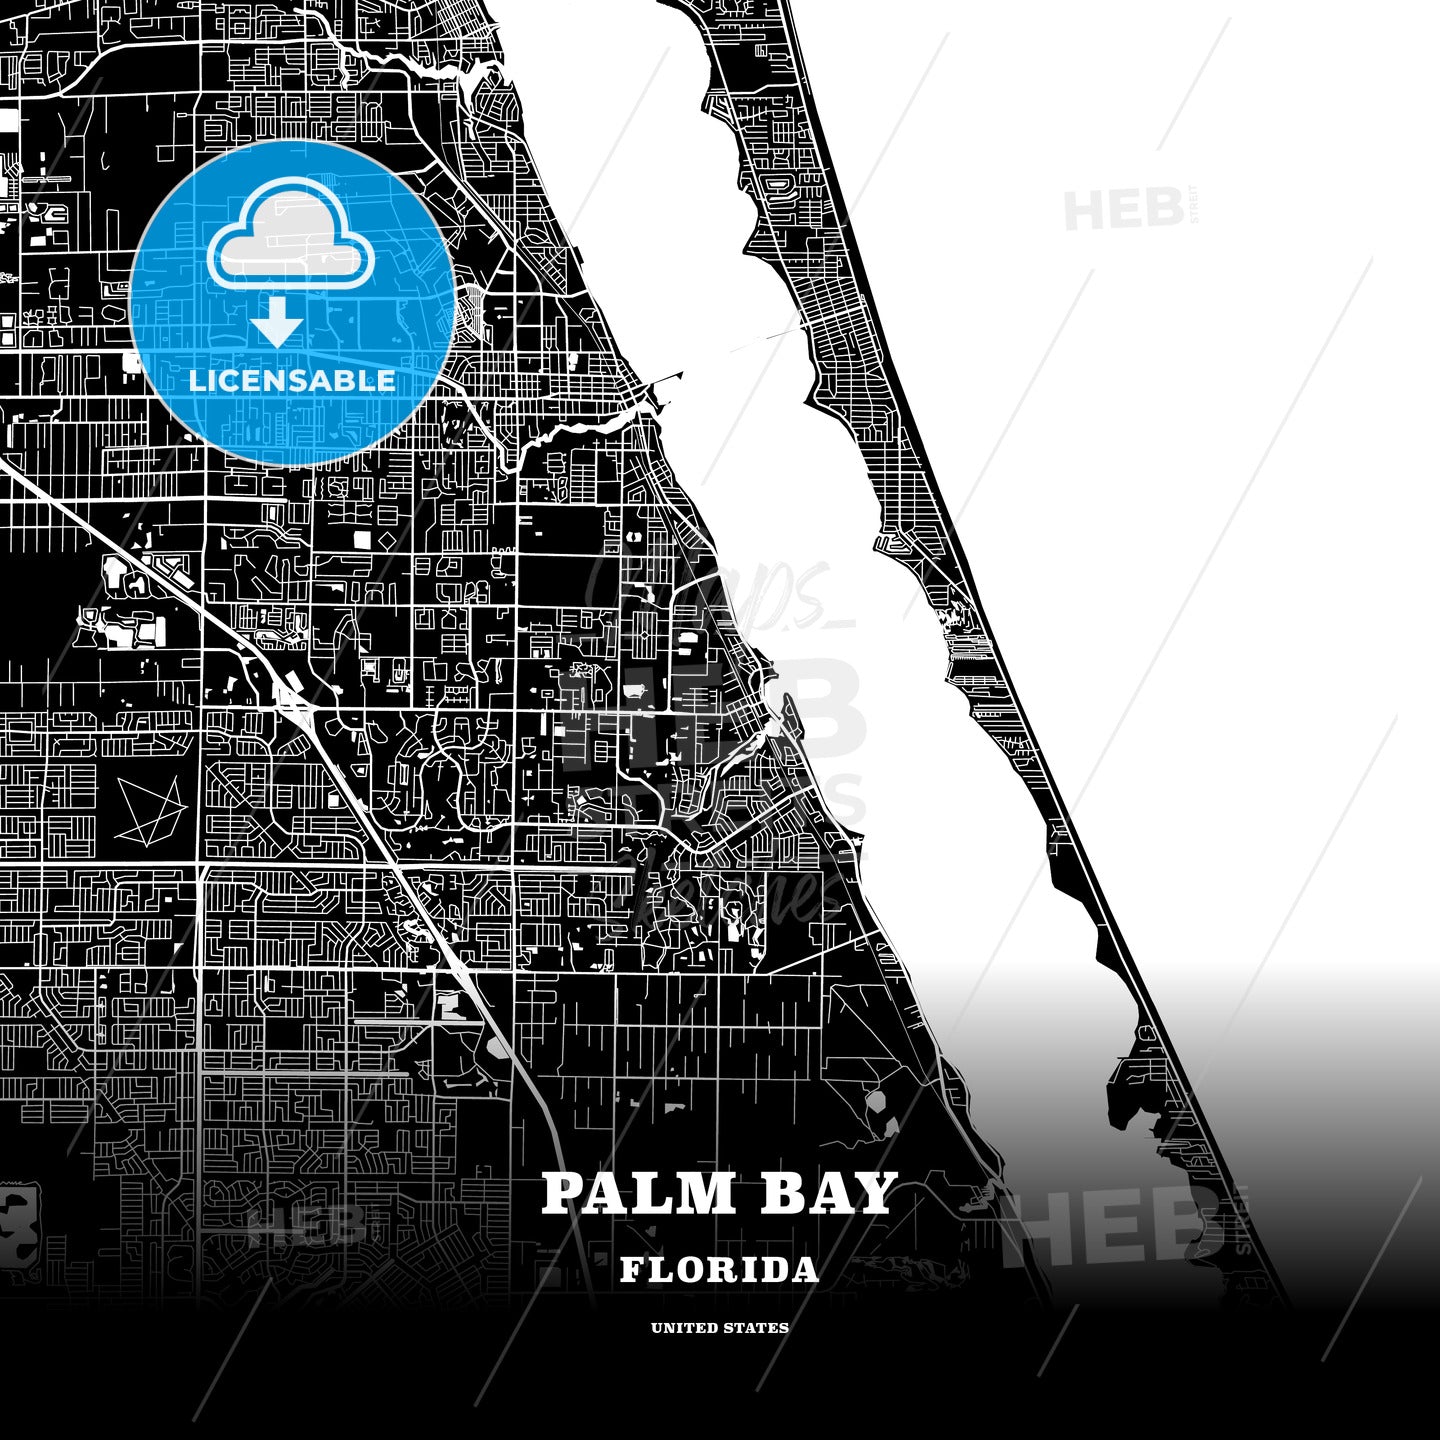 Palm Bay, Florida, USA map